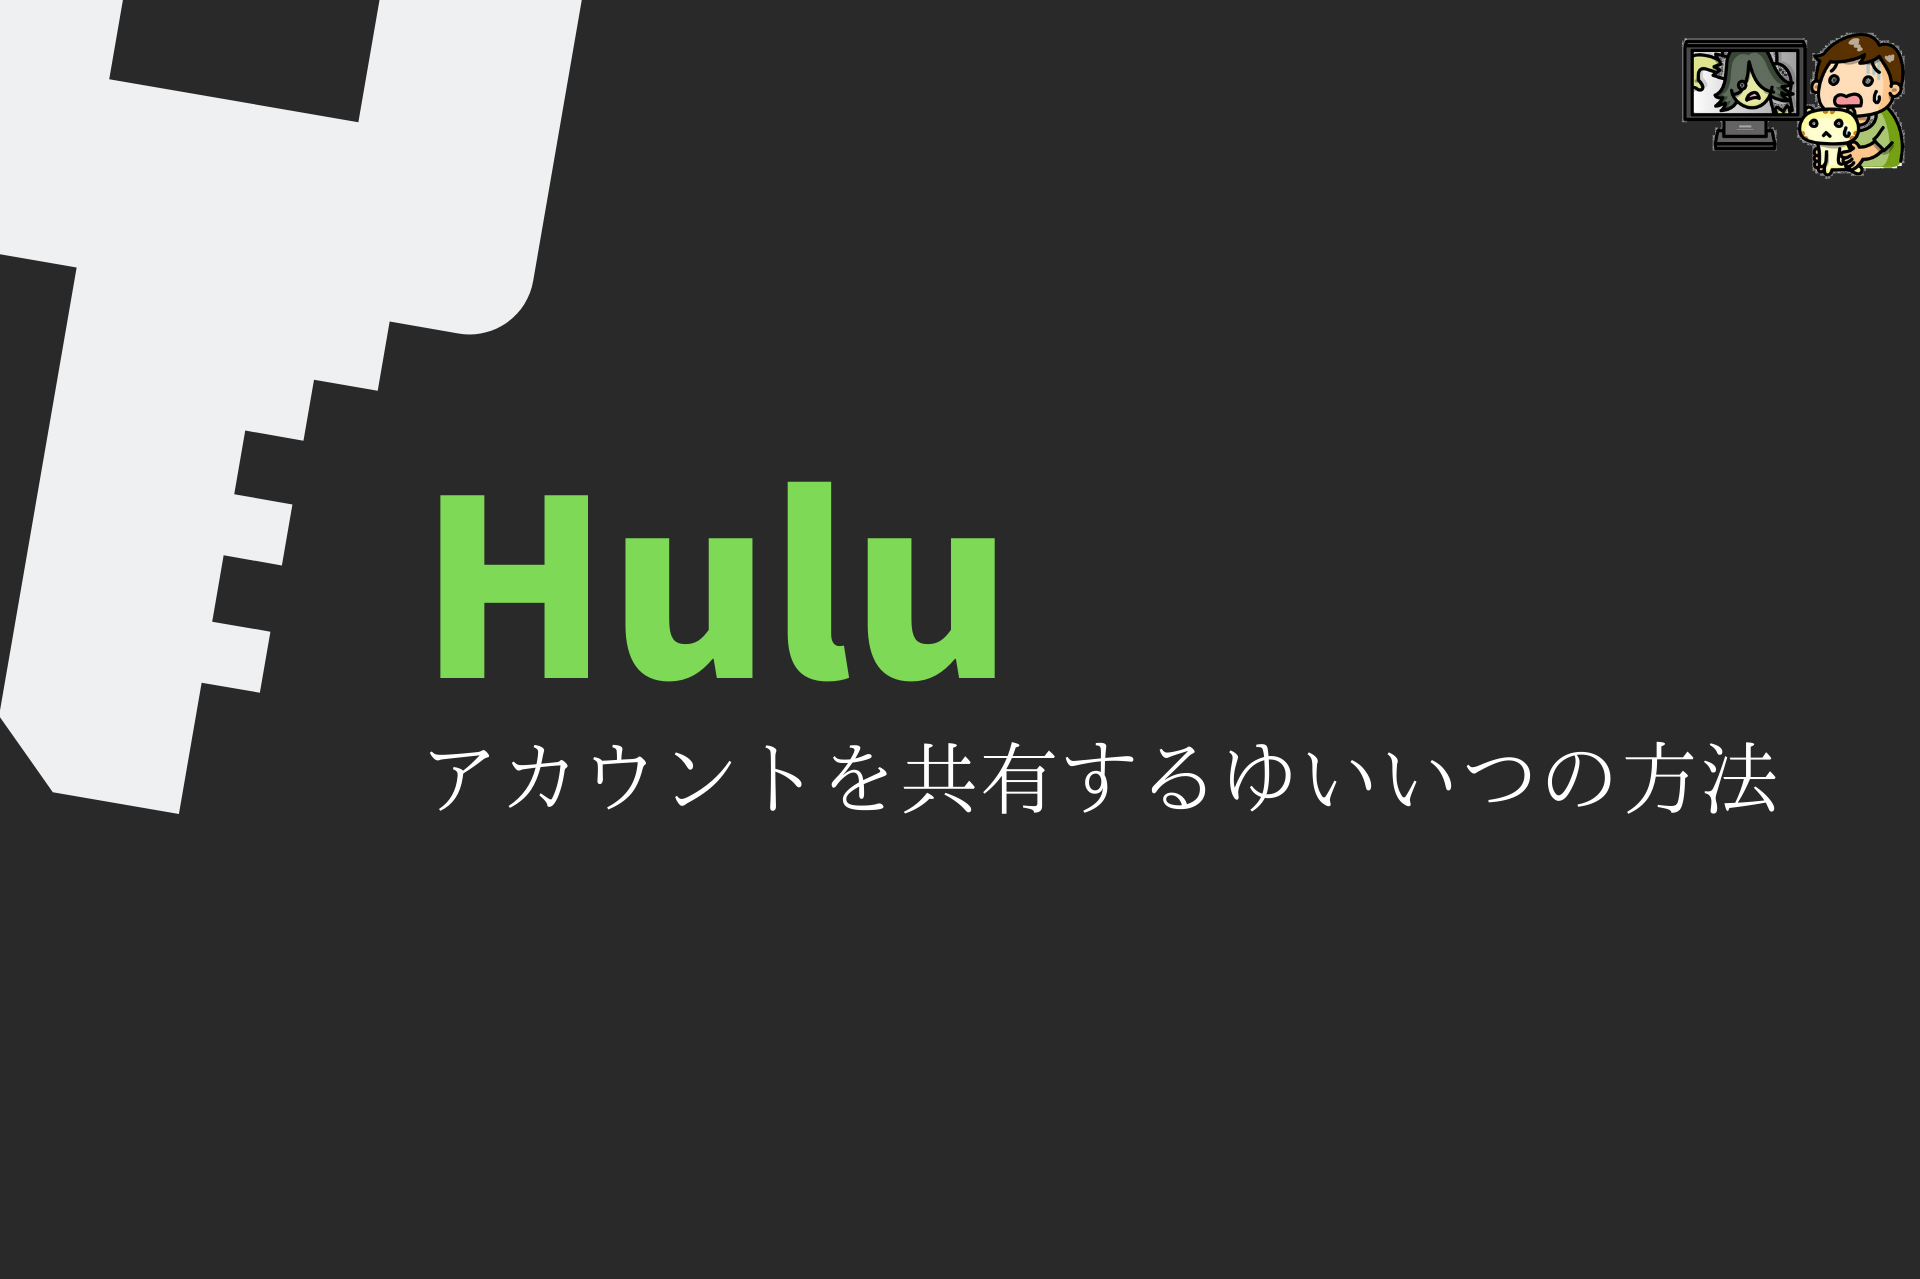 Huluでアカウント共有をする方法 誰と何人まで をくわしく解説 三度の飯よりvod